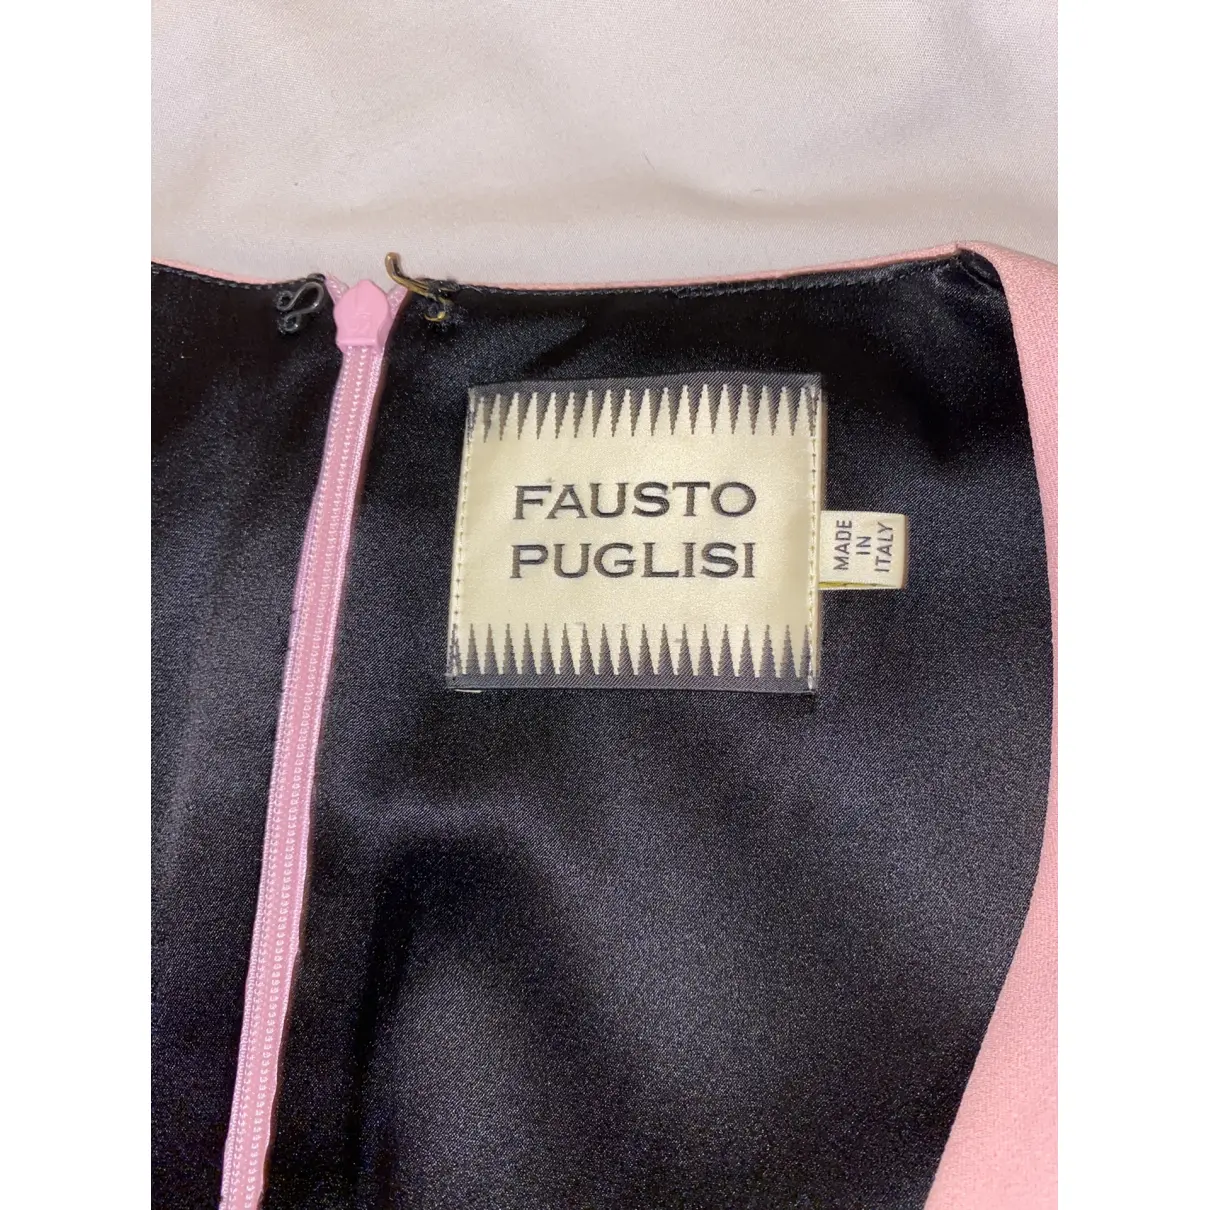 Buy Fausto Puglisi Mini dress online